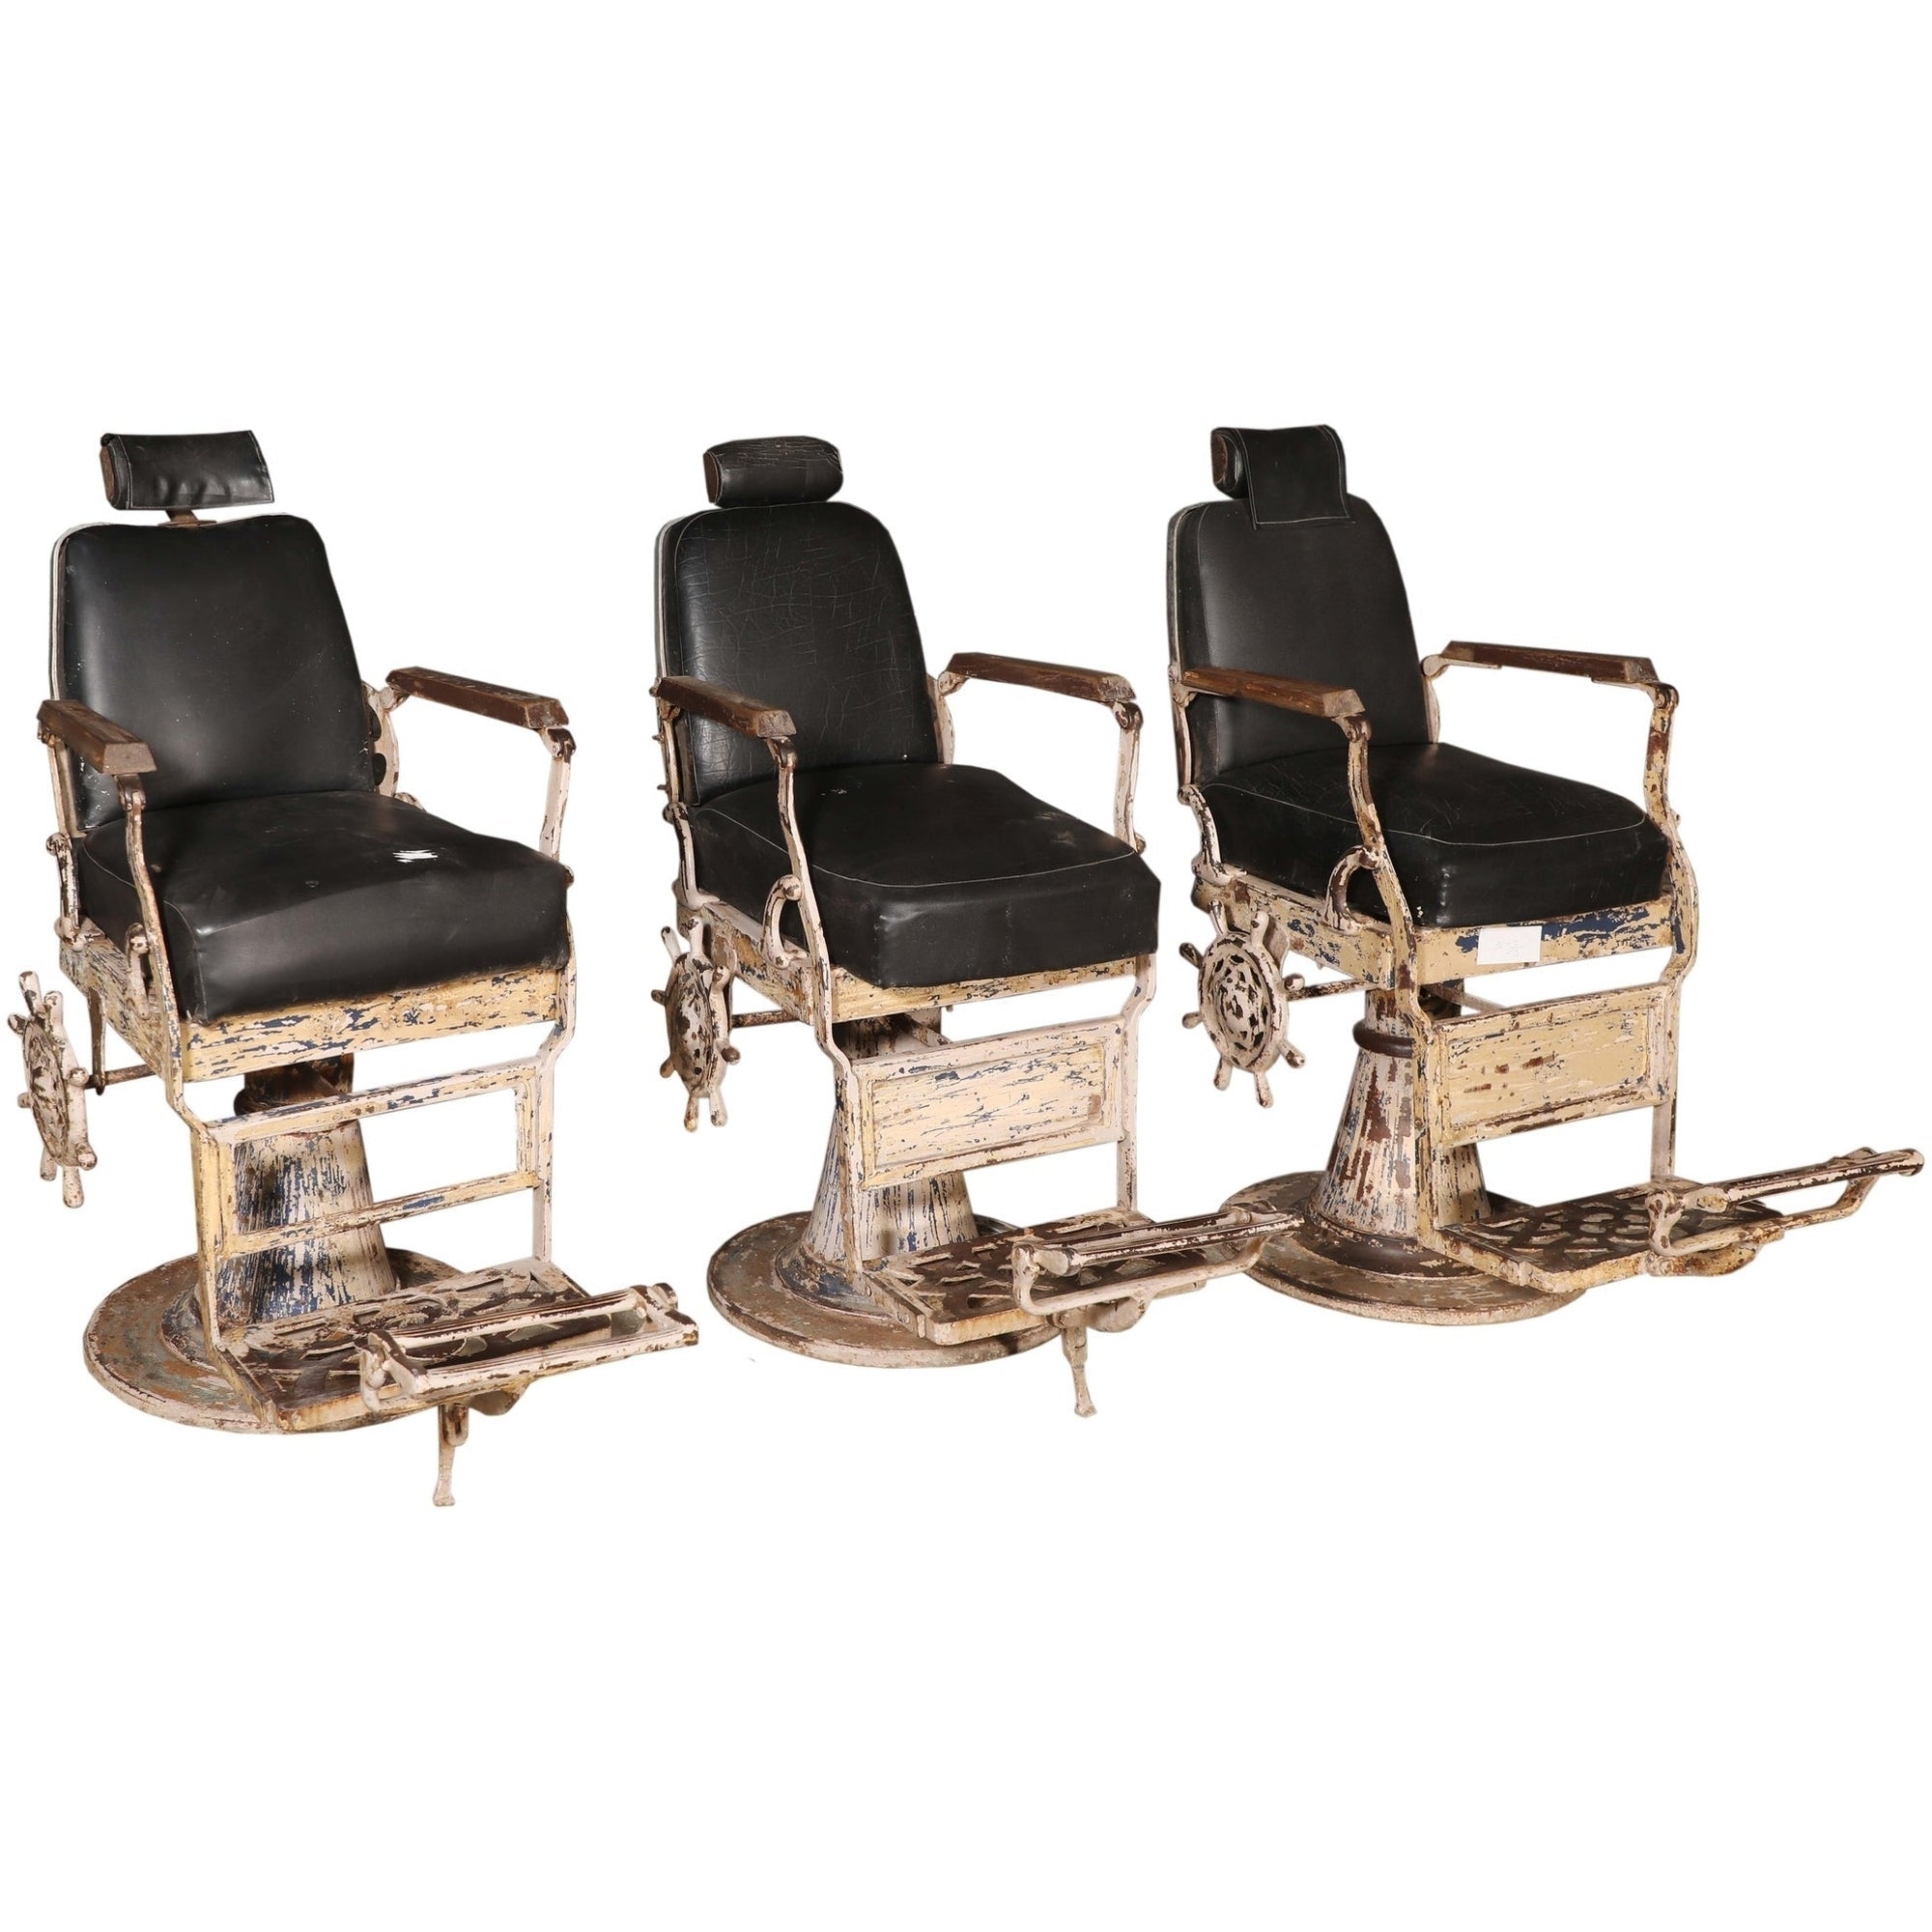 RM-060291, Art. Iron Chair, Iron & Ragzine Seat, 50+Yrs Old - iDekor8